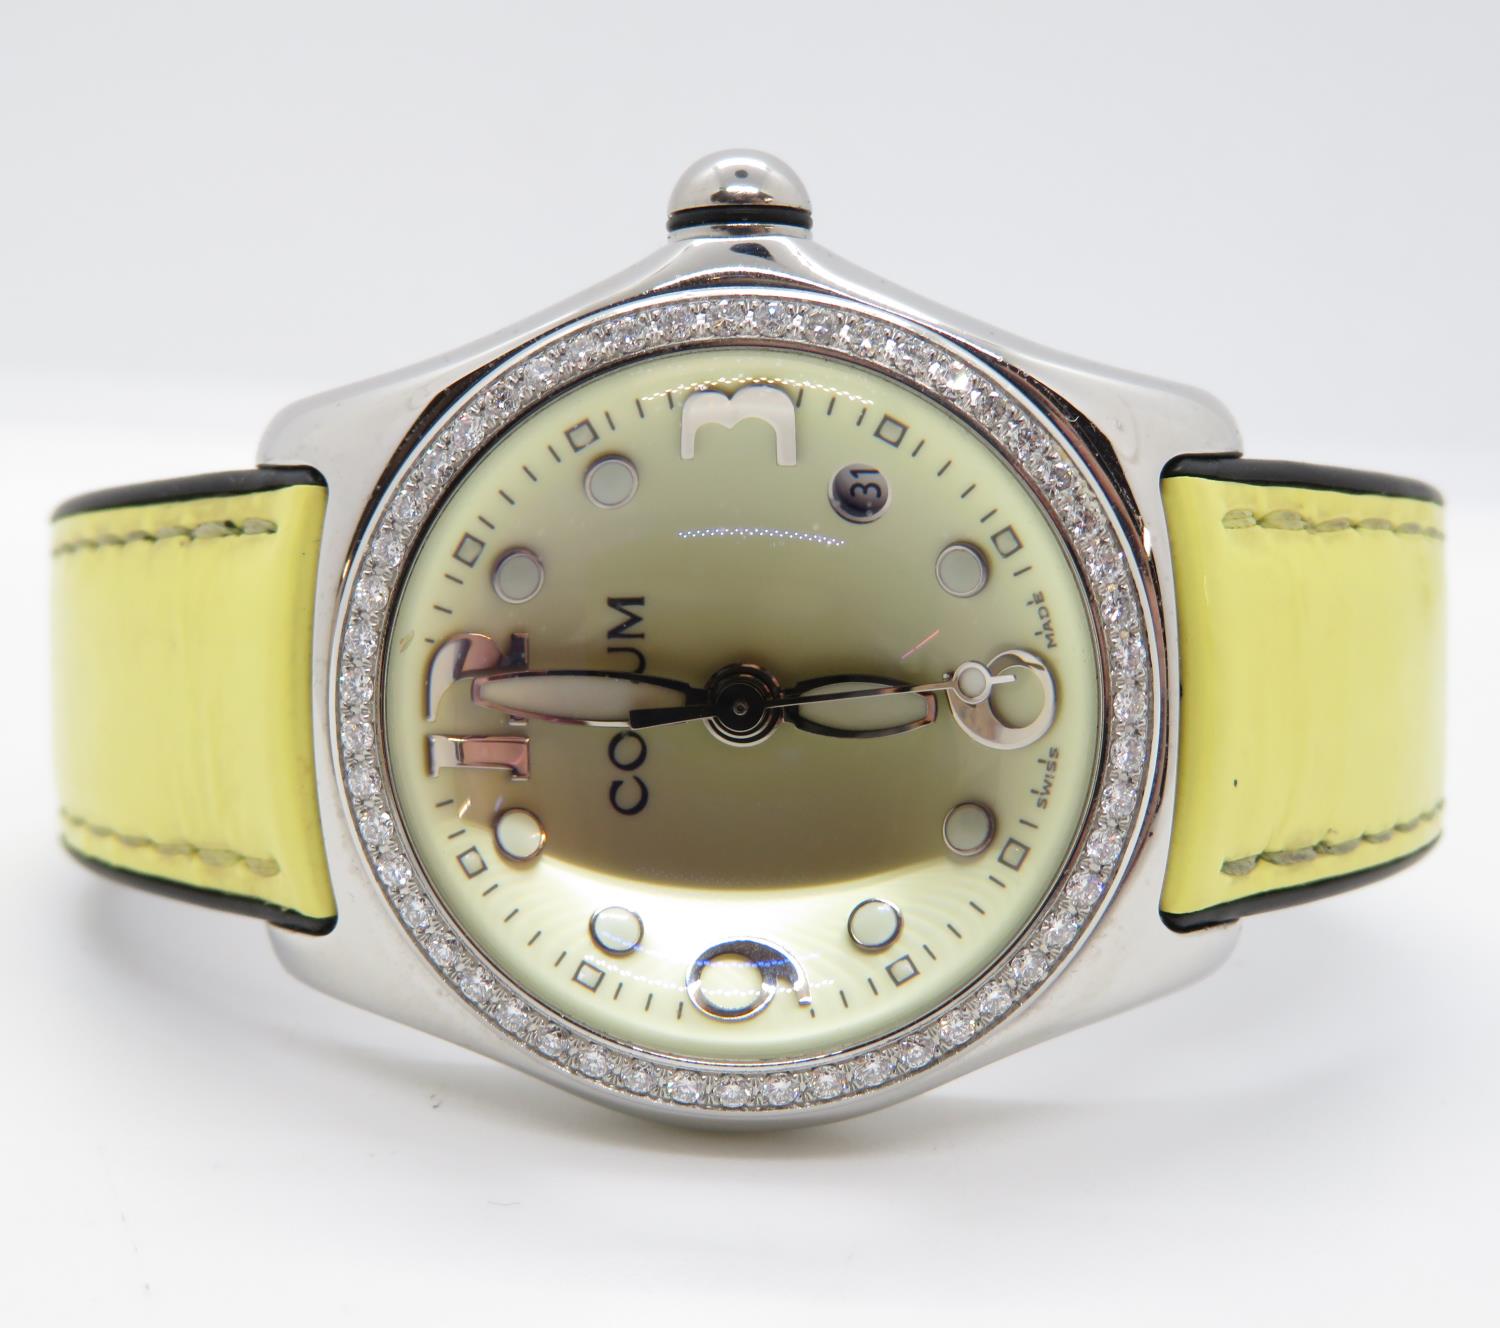 Corum Bubble watch diamond bezel and original box in near mint condition